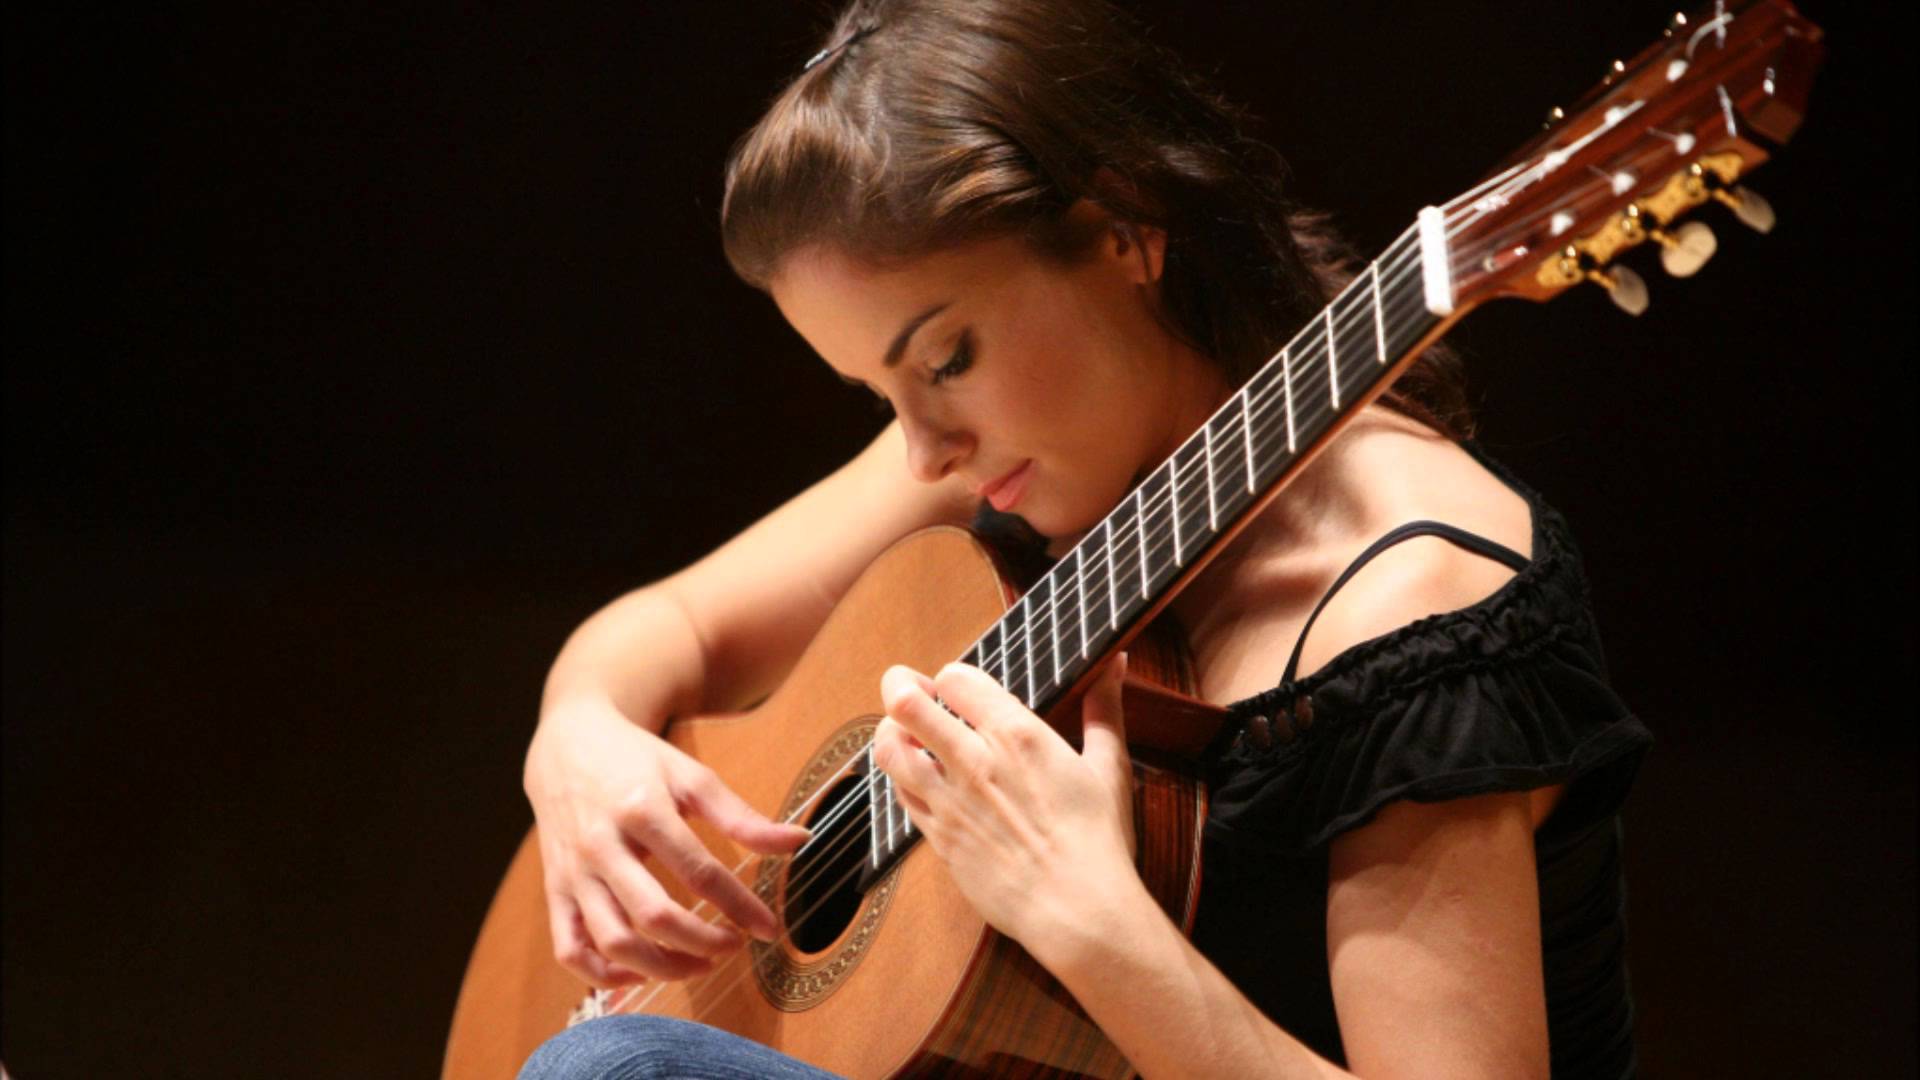 Premier classical guitarist Ana Vidović will perform August 7 – 9, 2015 at the Lake Tahoe SummerFest. (Photo: Courtesy of Ana Vidović)